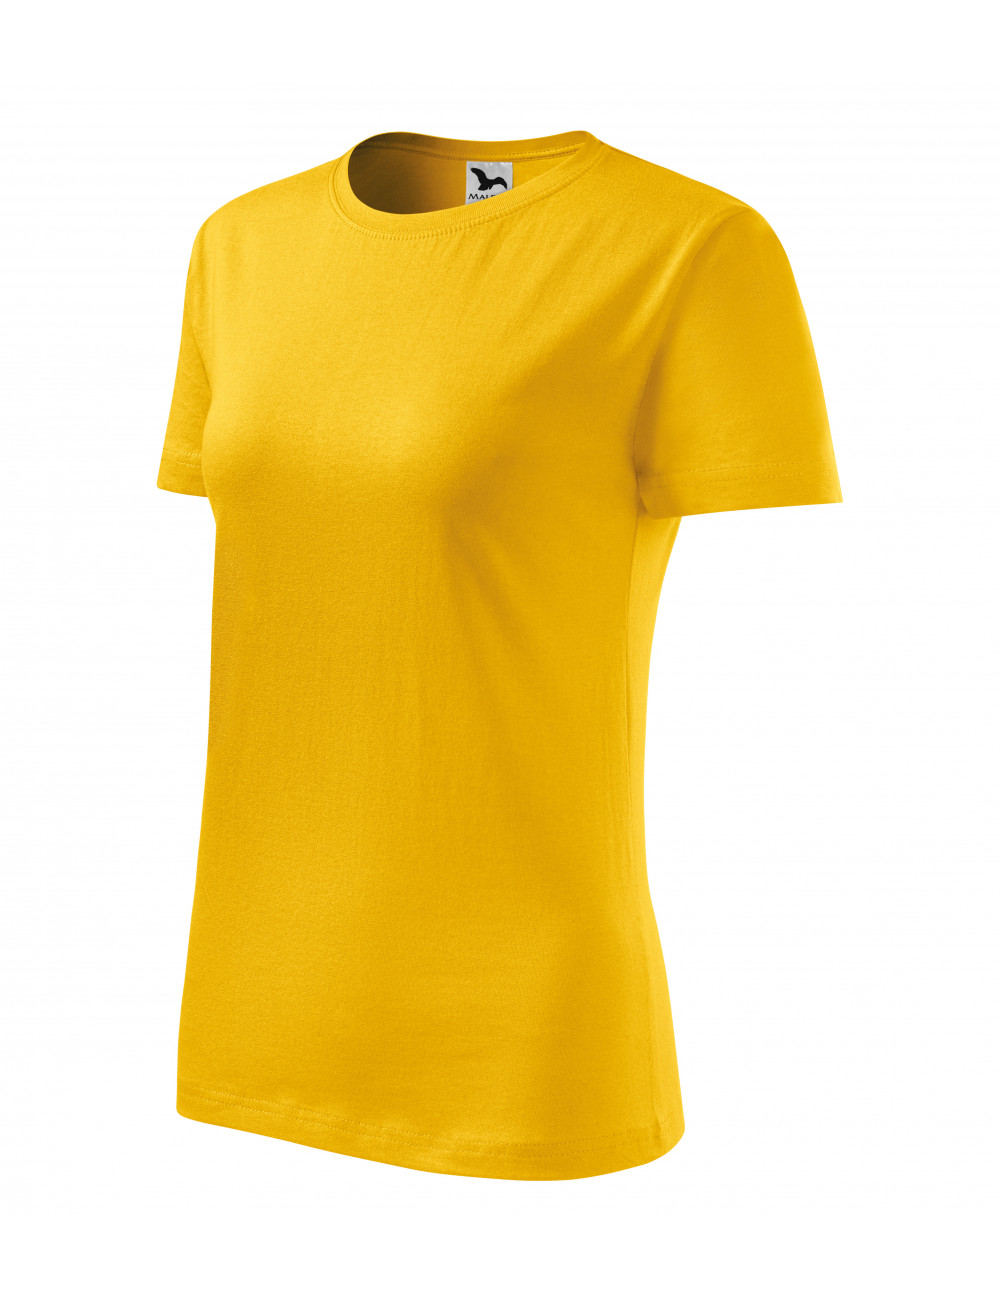 Damen T-Shirt klassisch neu 133 gelb Adler Malfini